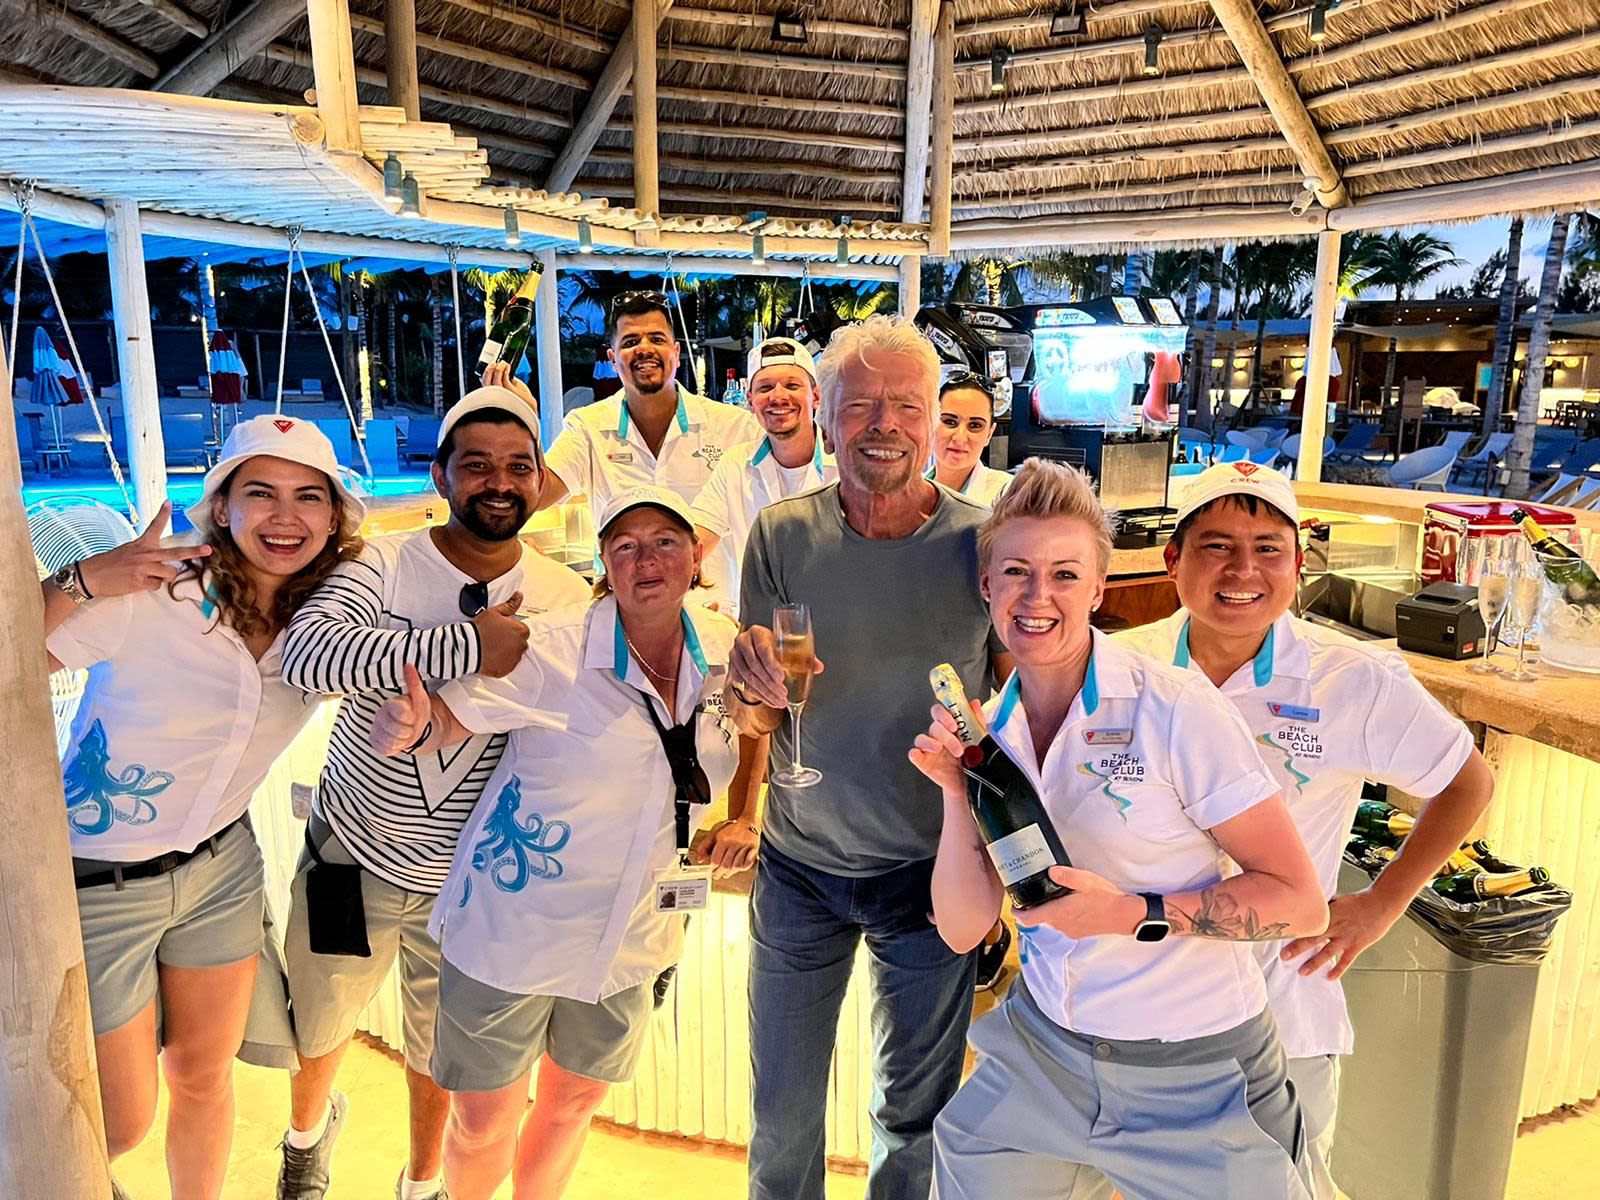 Richard Branson with the crew at Virgin Voyages Bimini beach club